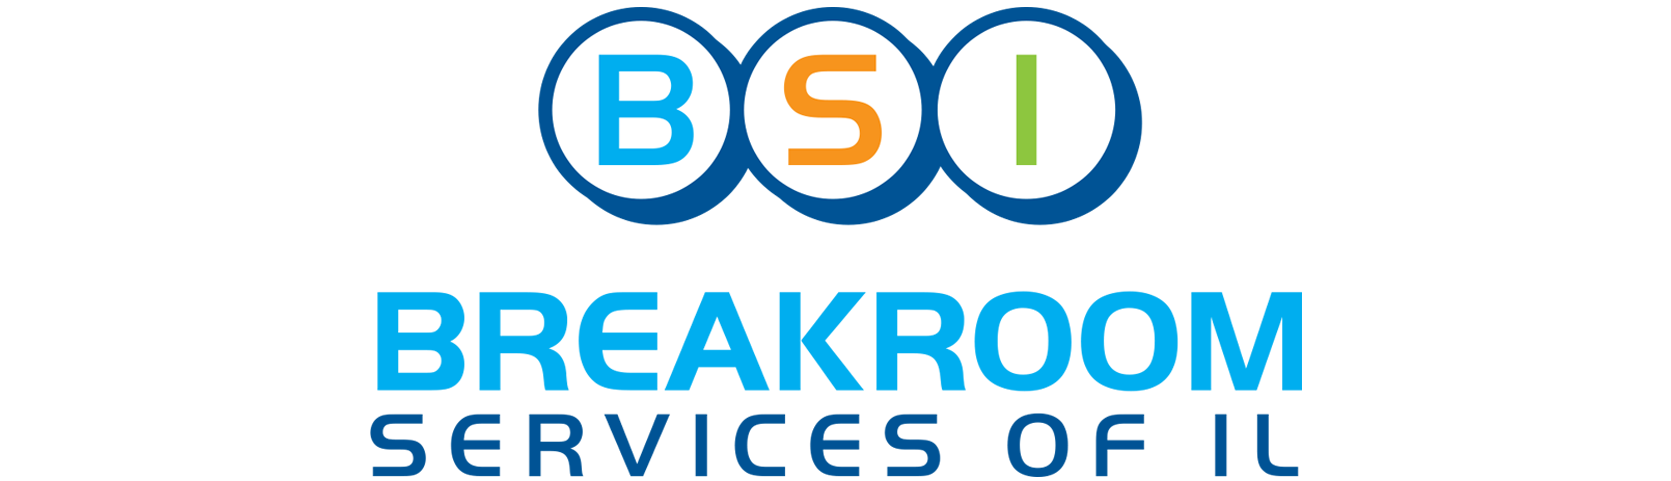 Breakroom Services of Illinois